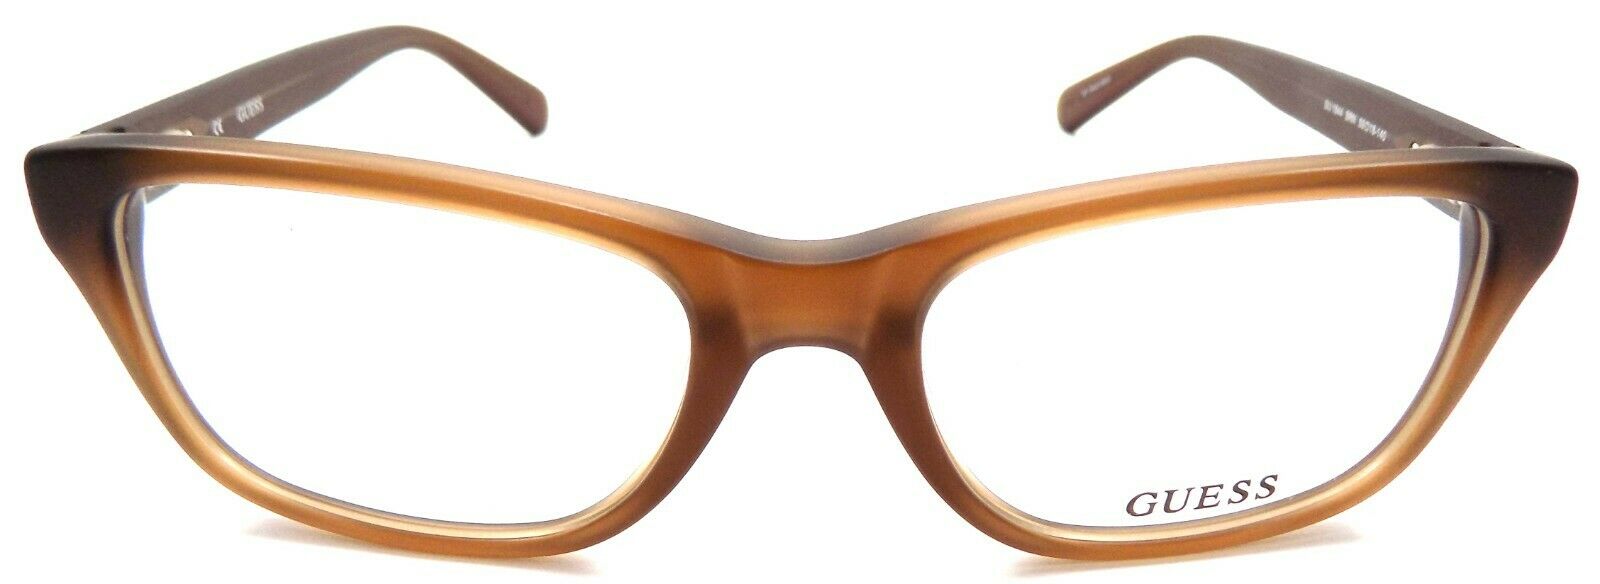 2-GUESS GU1844 BRN Men's Eyeglasses Frames Plastic 53-18-140 Matte Brown + CASE-715583293267-IKSpecs